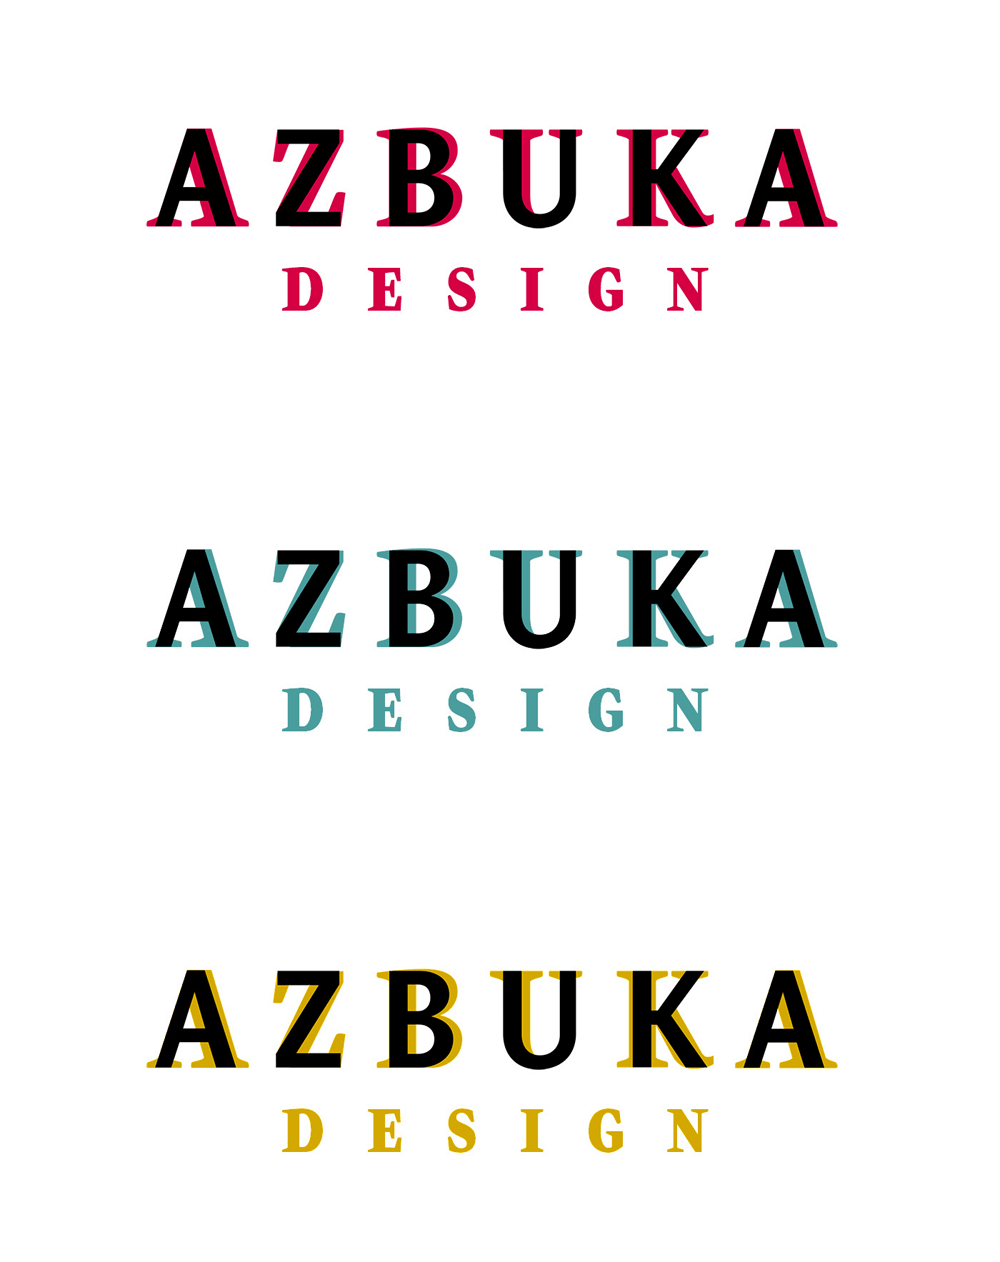 azbuka design process 08